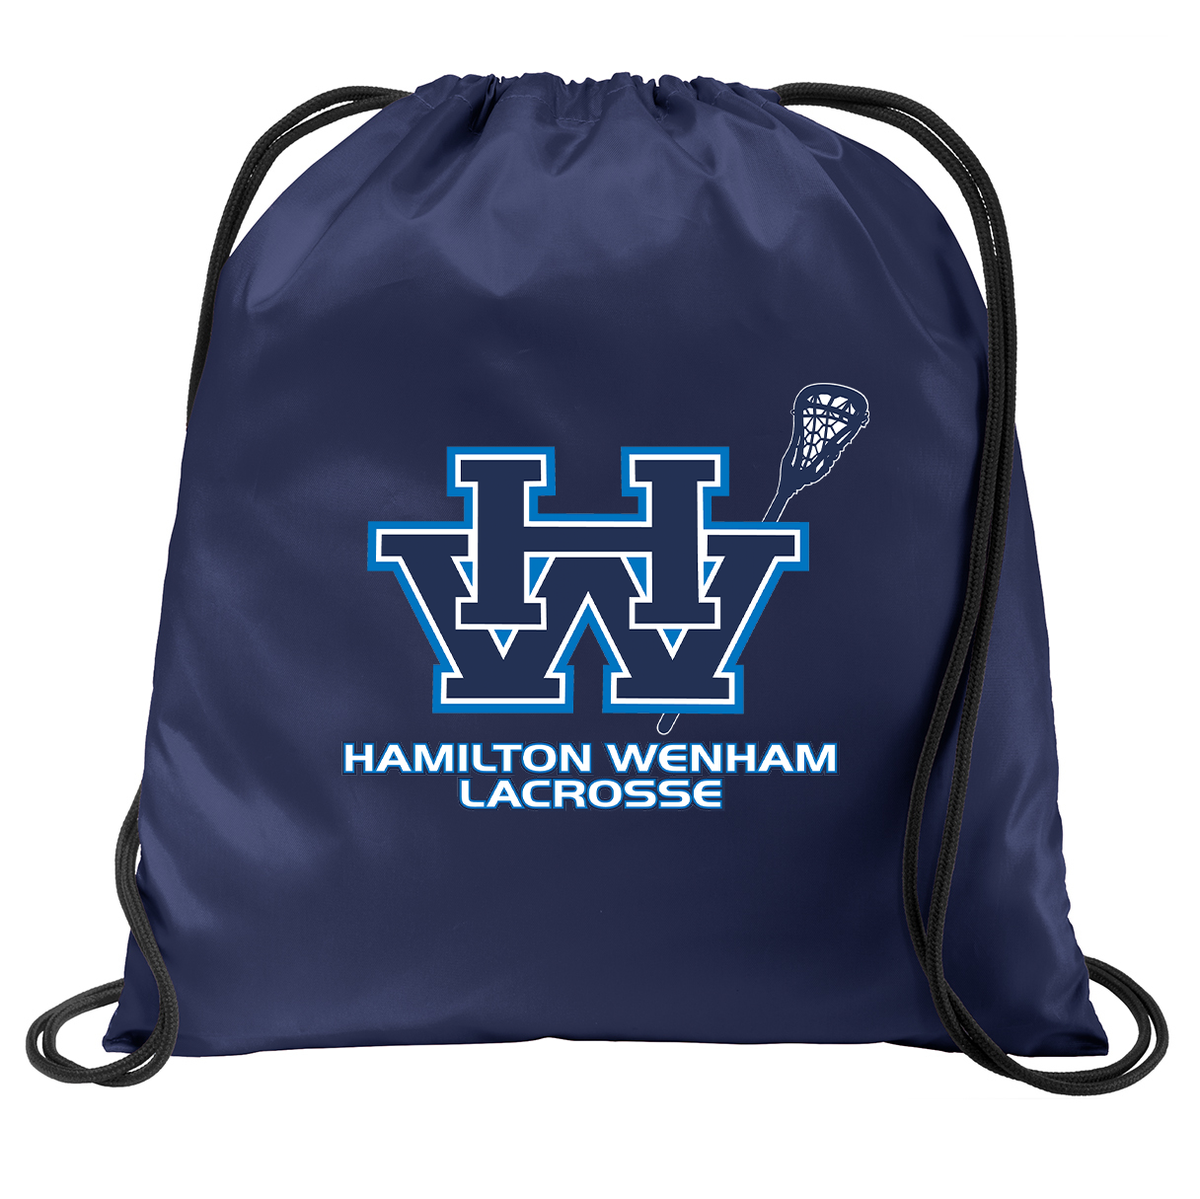 Hamilton Wenham Lacrosse Cinch Pack